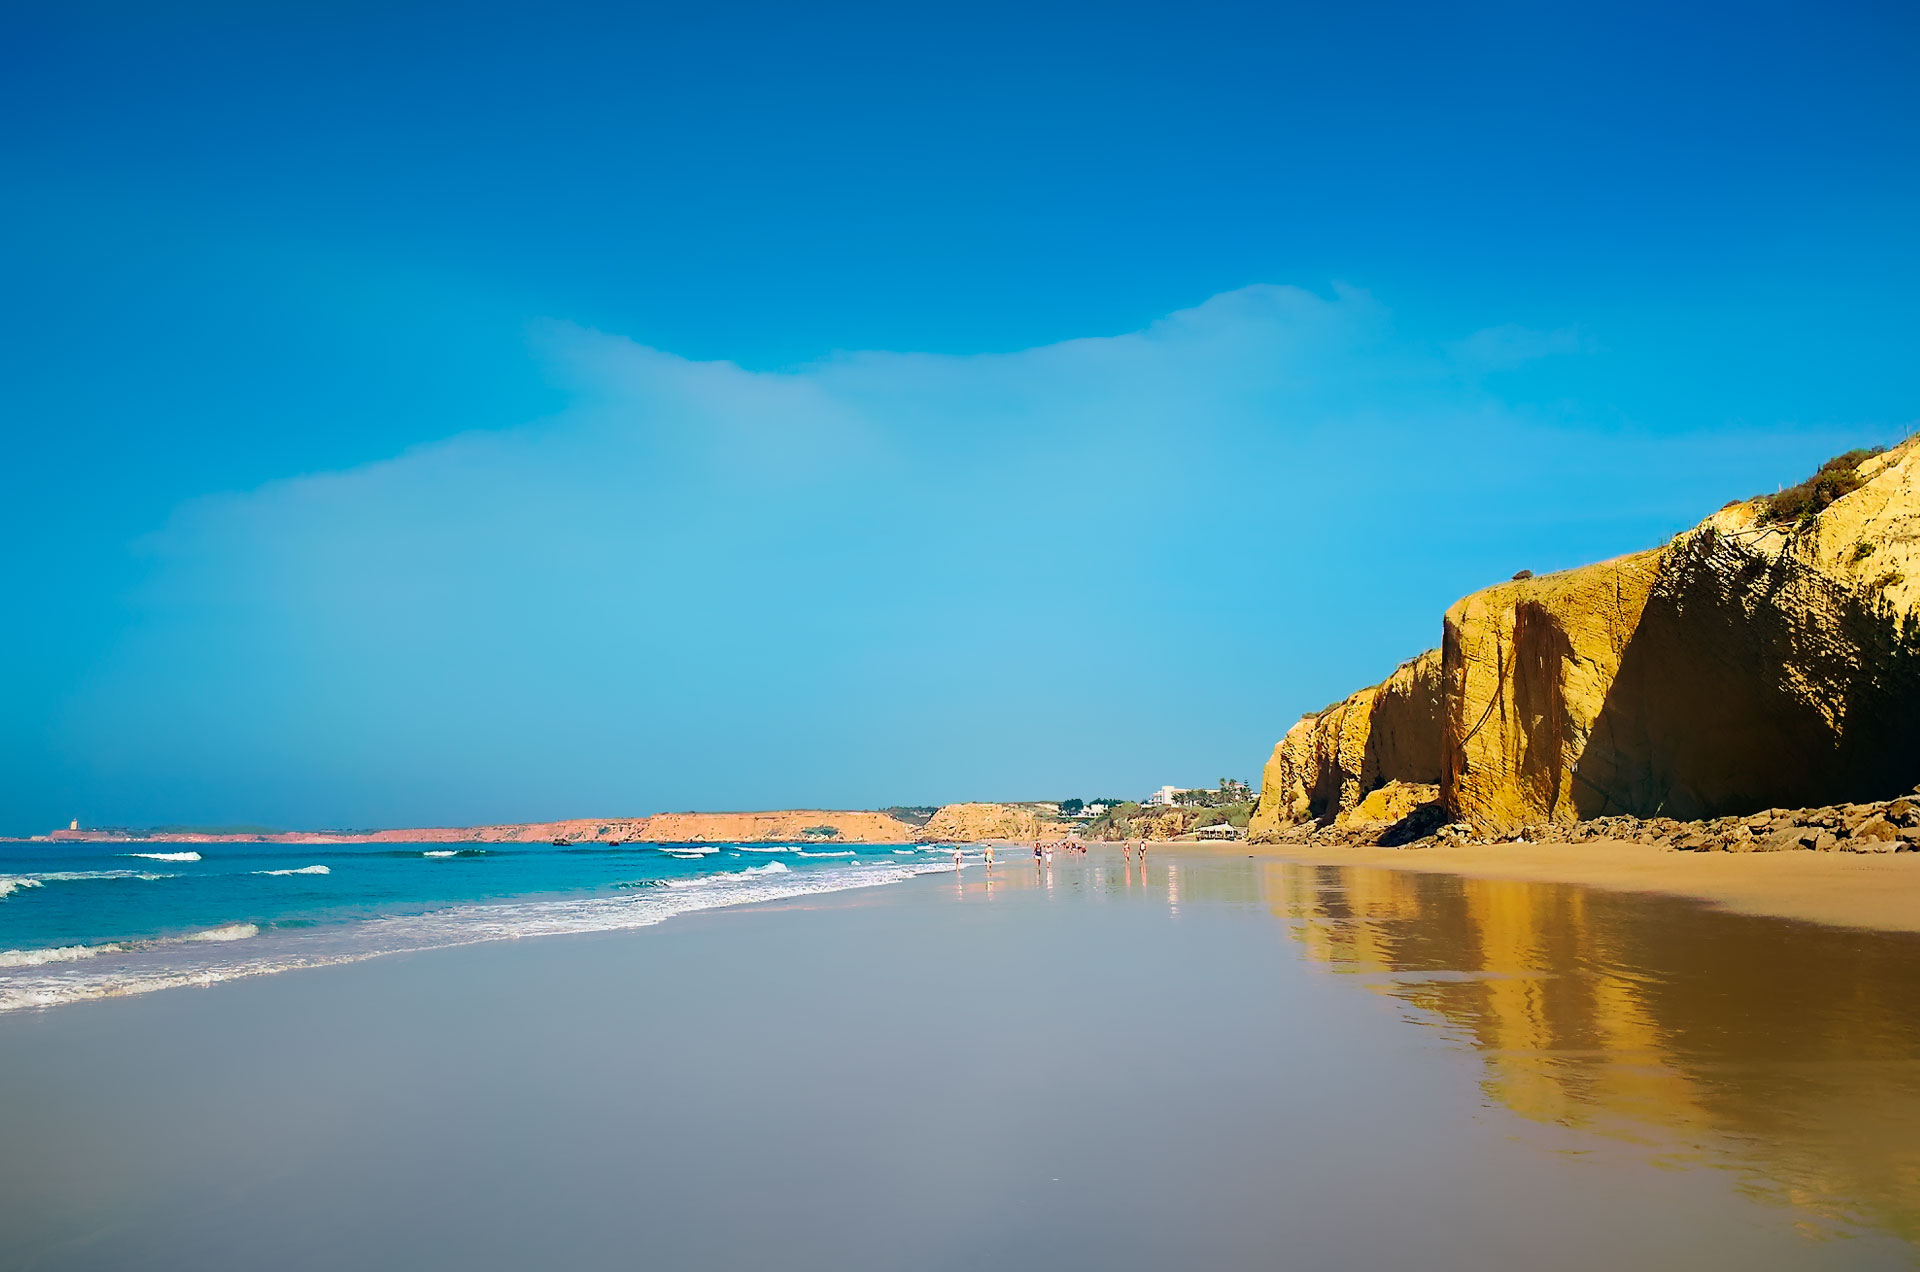 La Fontanilla Beach - Conil de la Frontera (Cádiz)